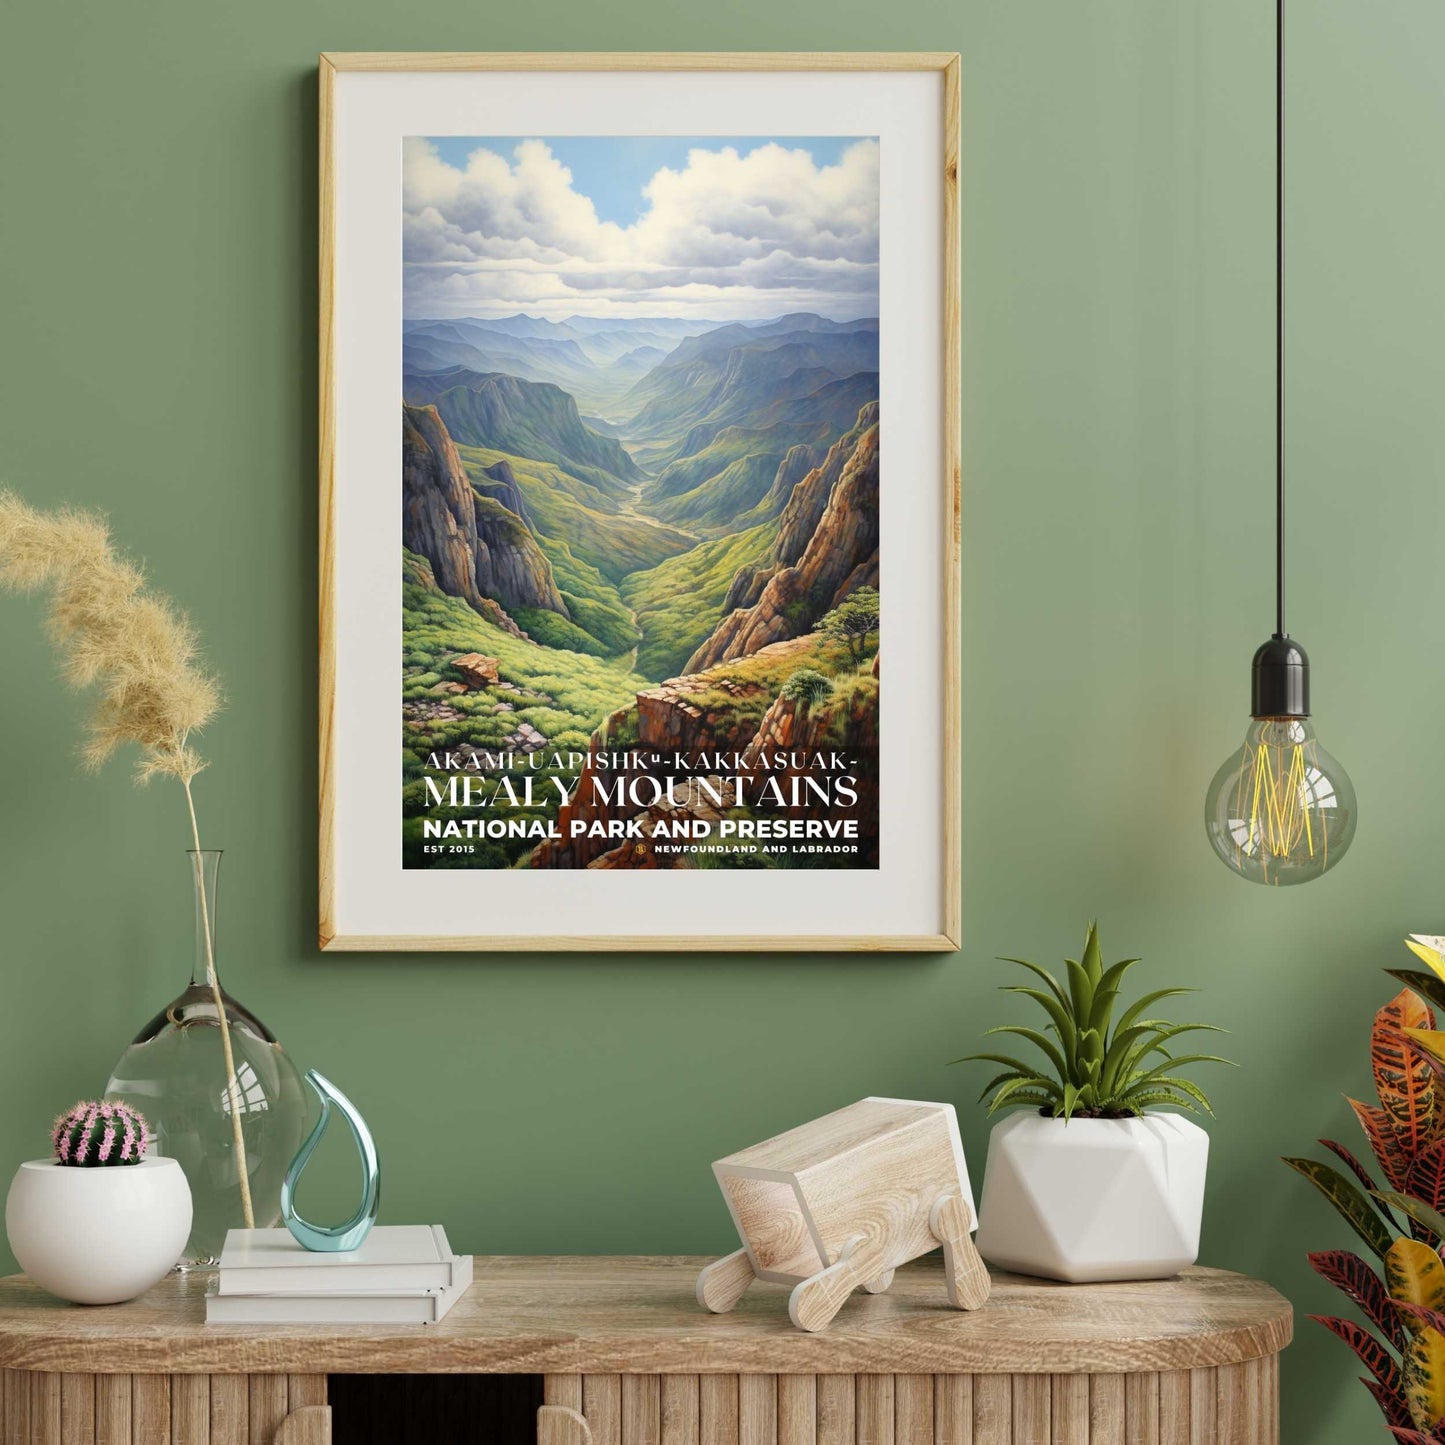 Akami-Uapishk-KakKasuak-Mealy Mountains National Park Poster | S02